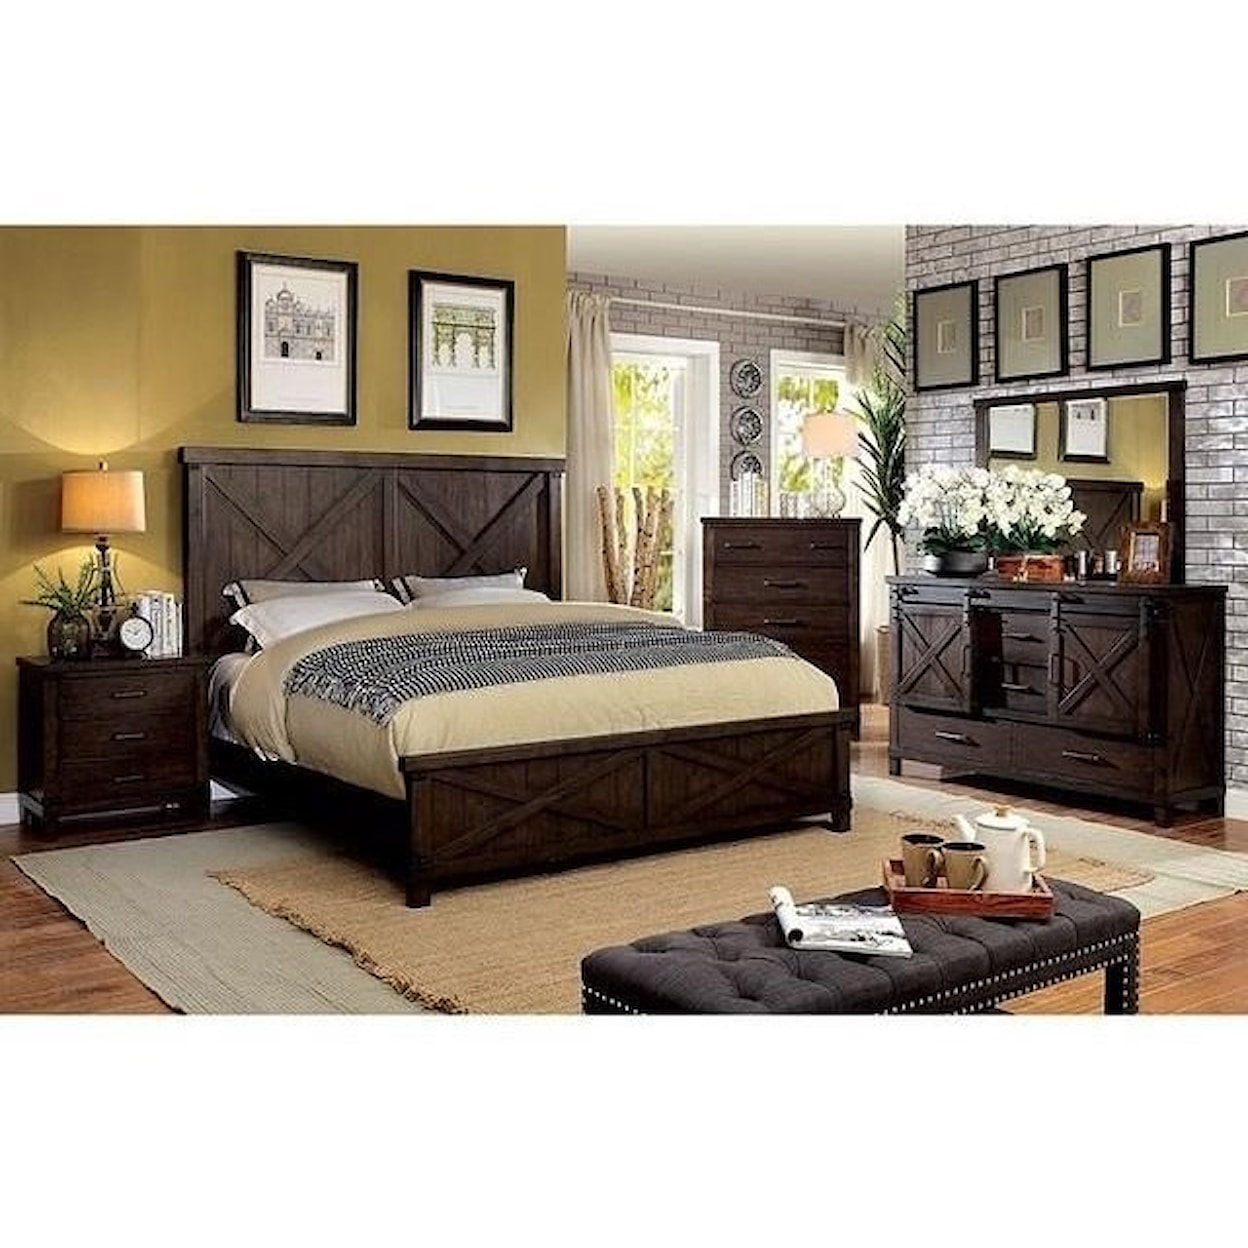 Furniture of America Bianca King Bed